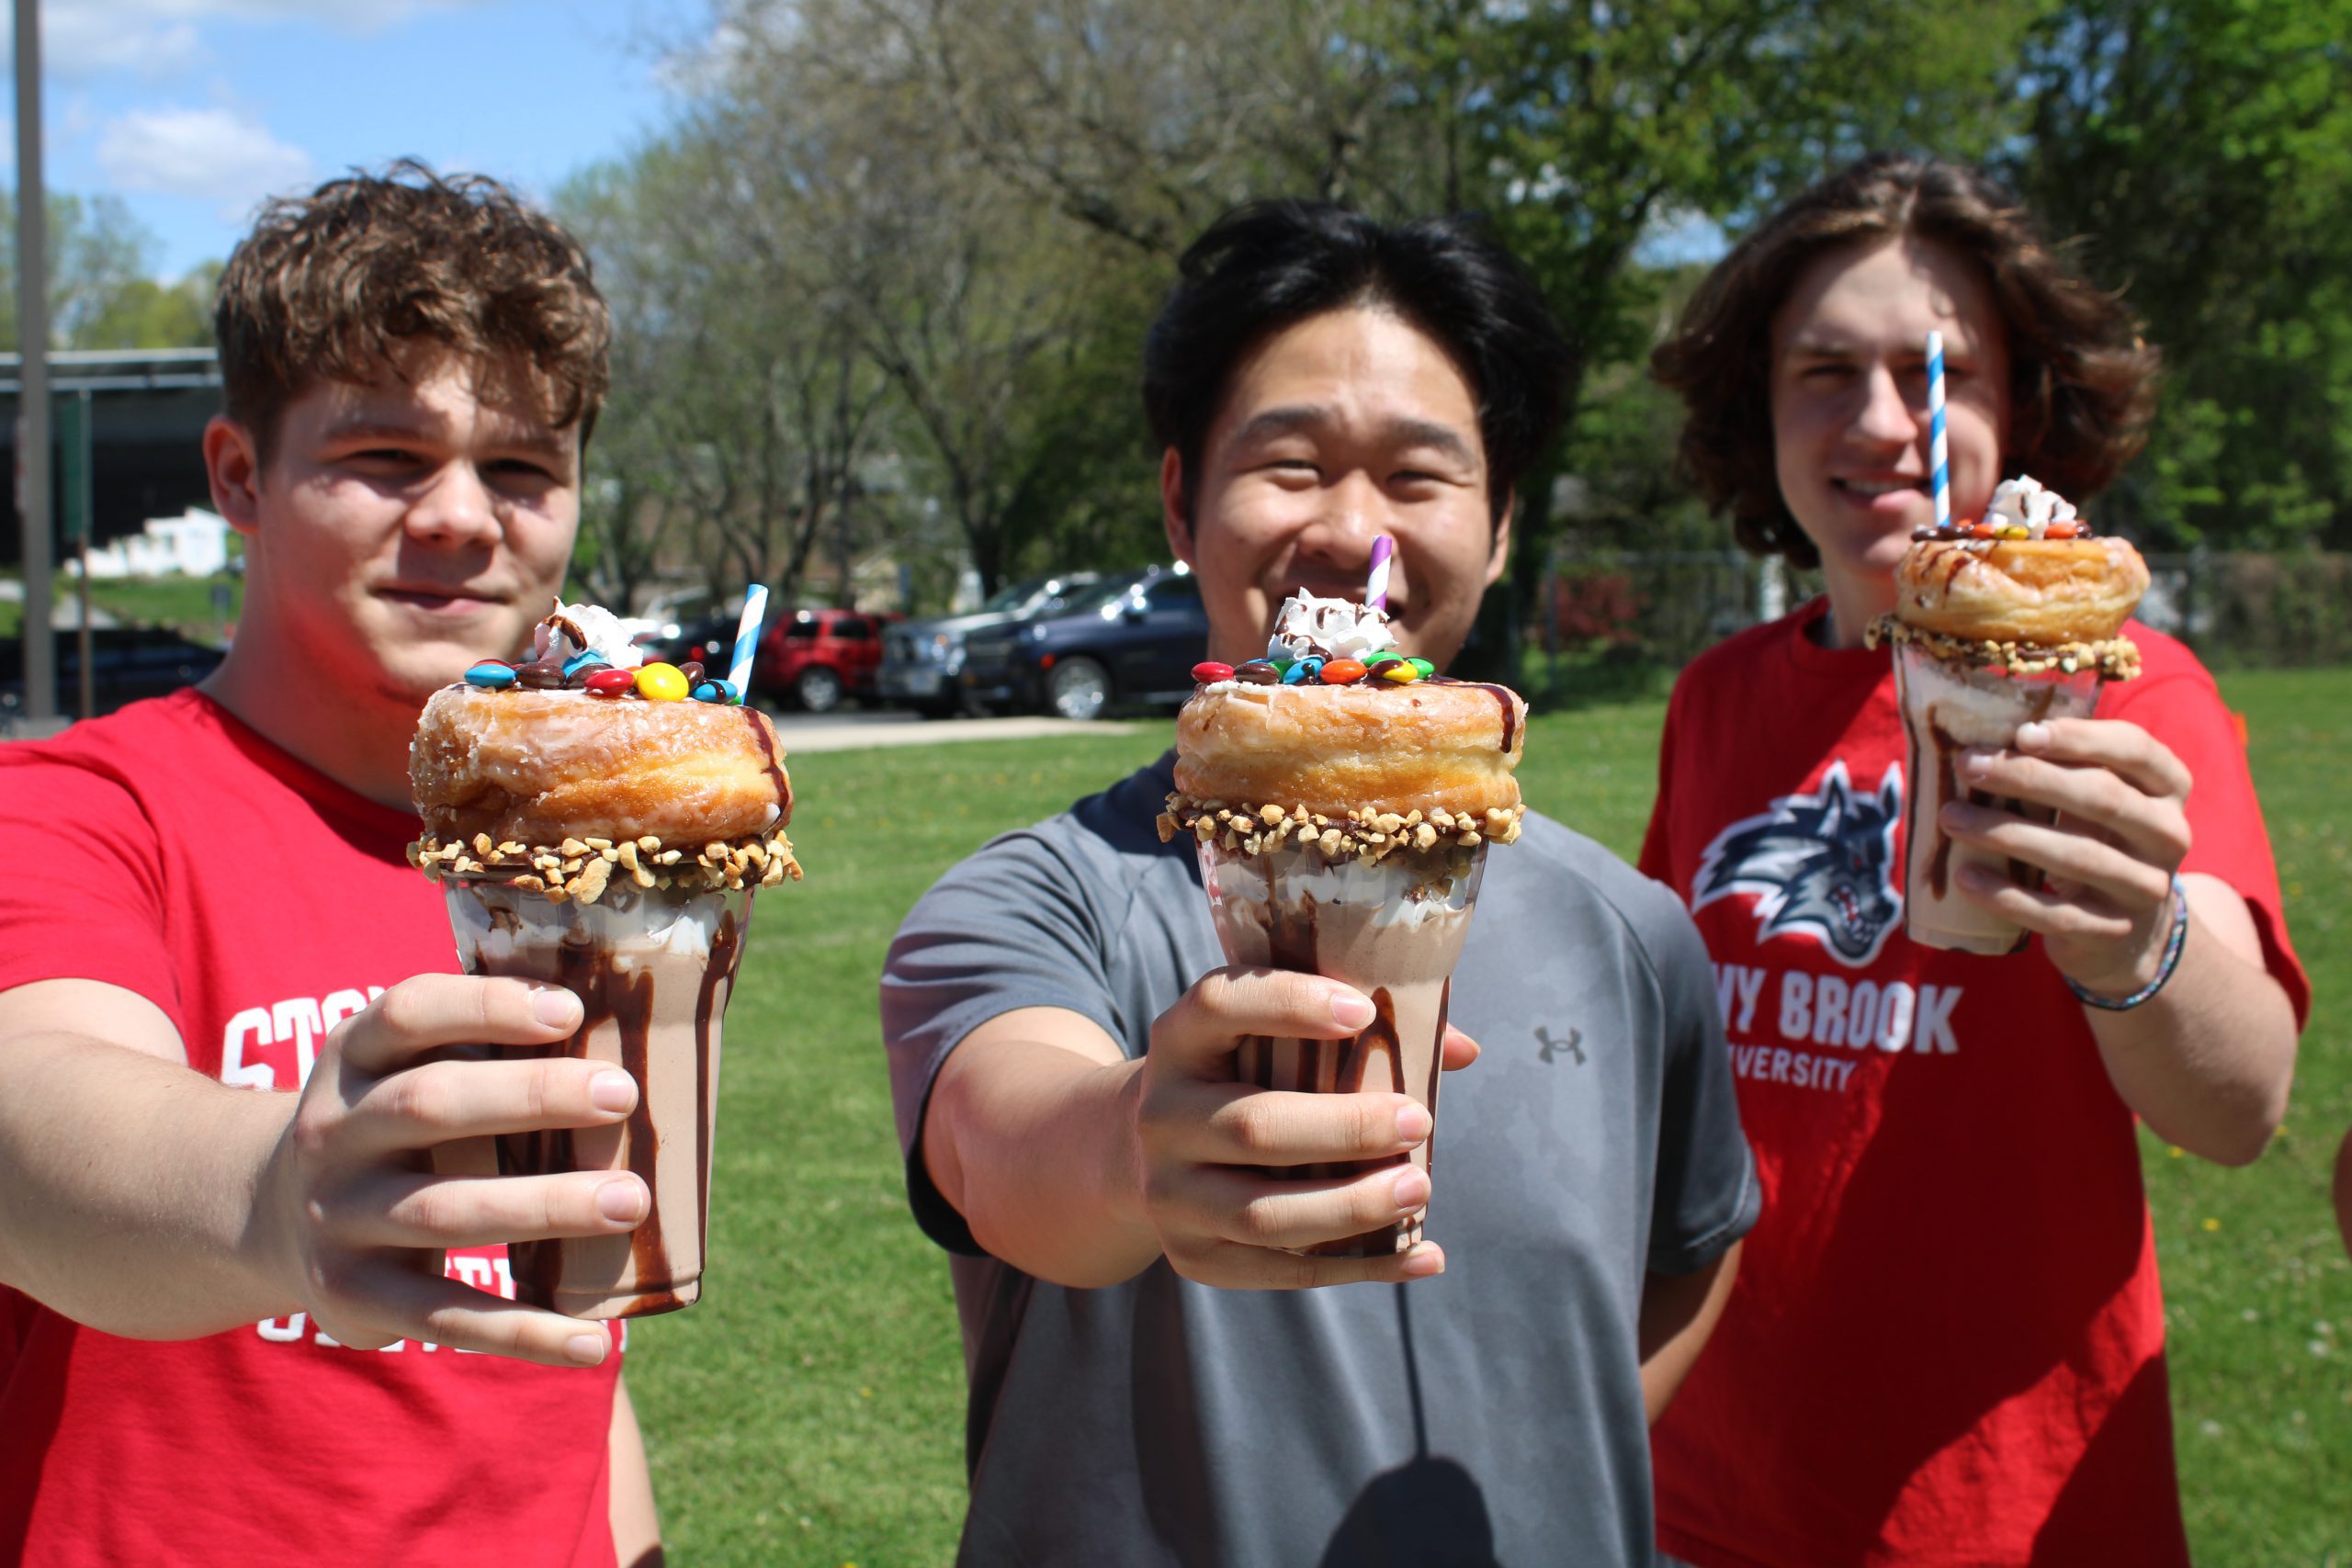 students pose with milkshakes